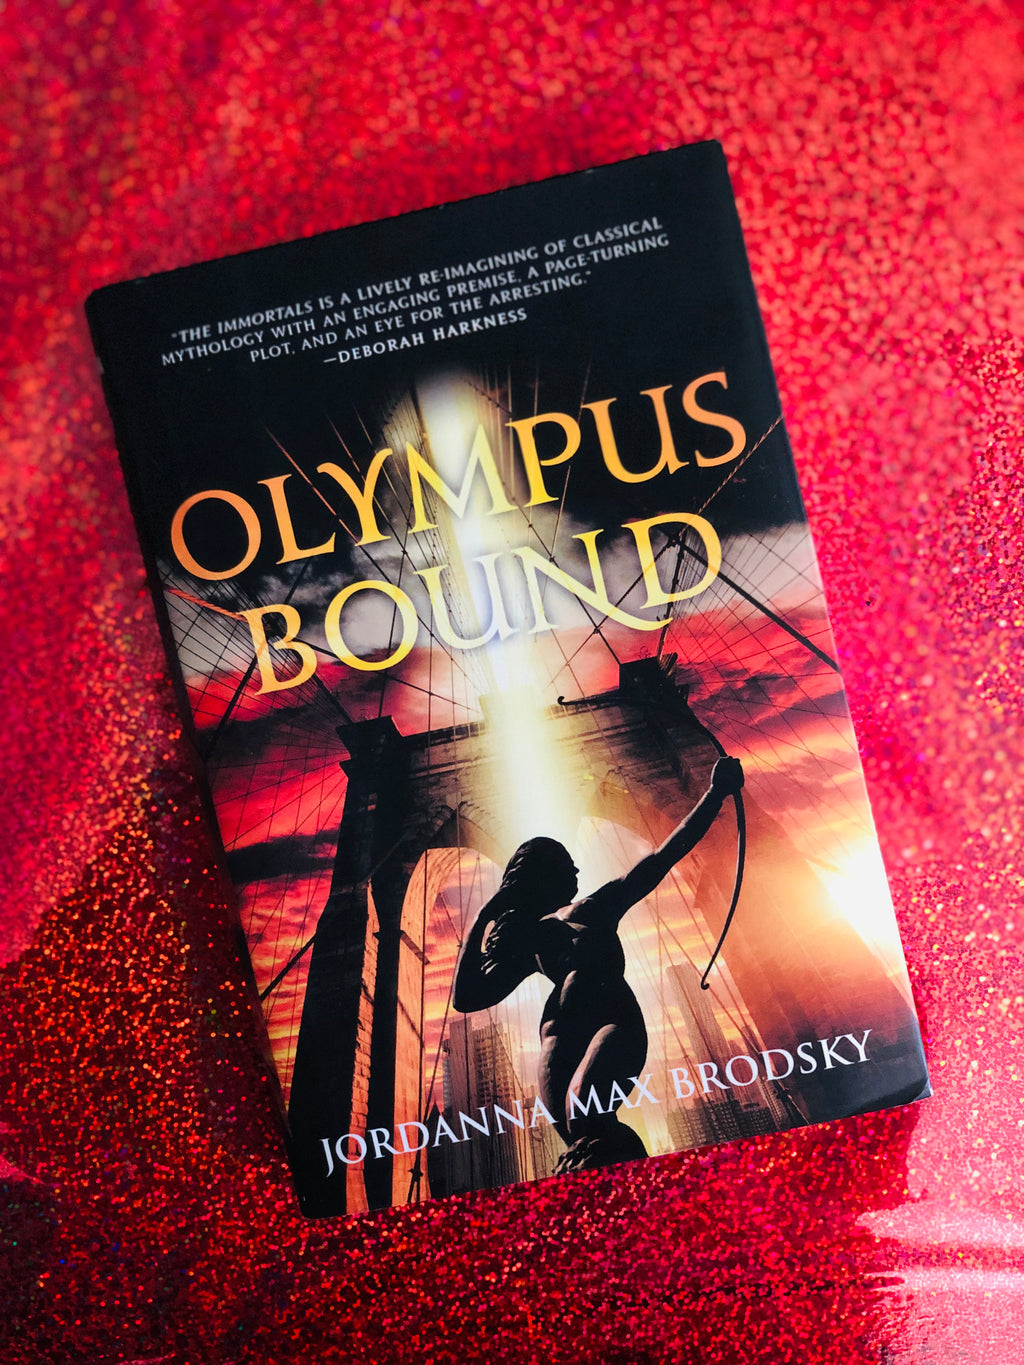 Olympus Bound- By Jordanna Max Brodsky